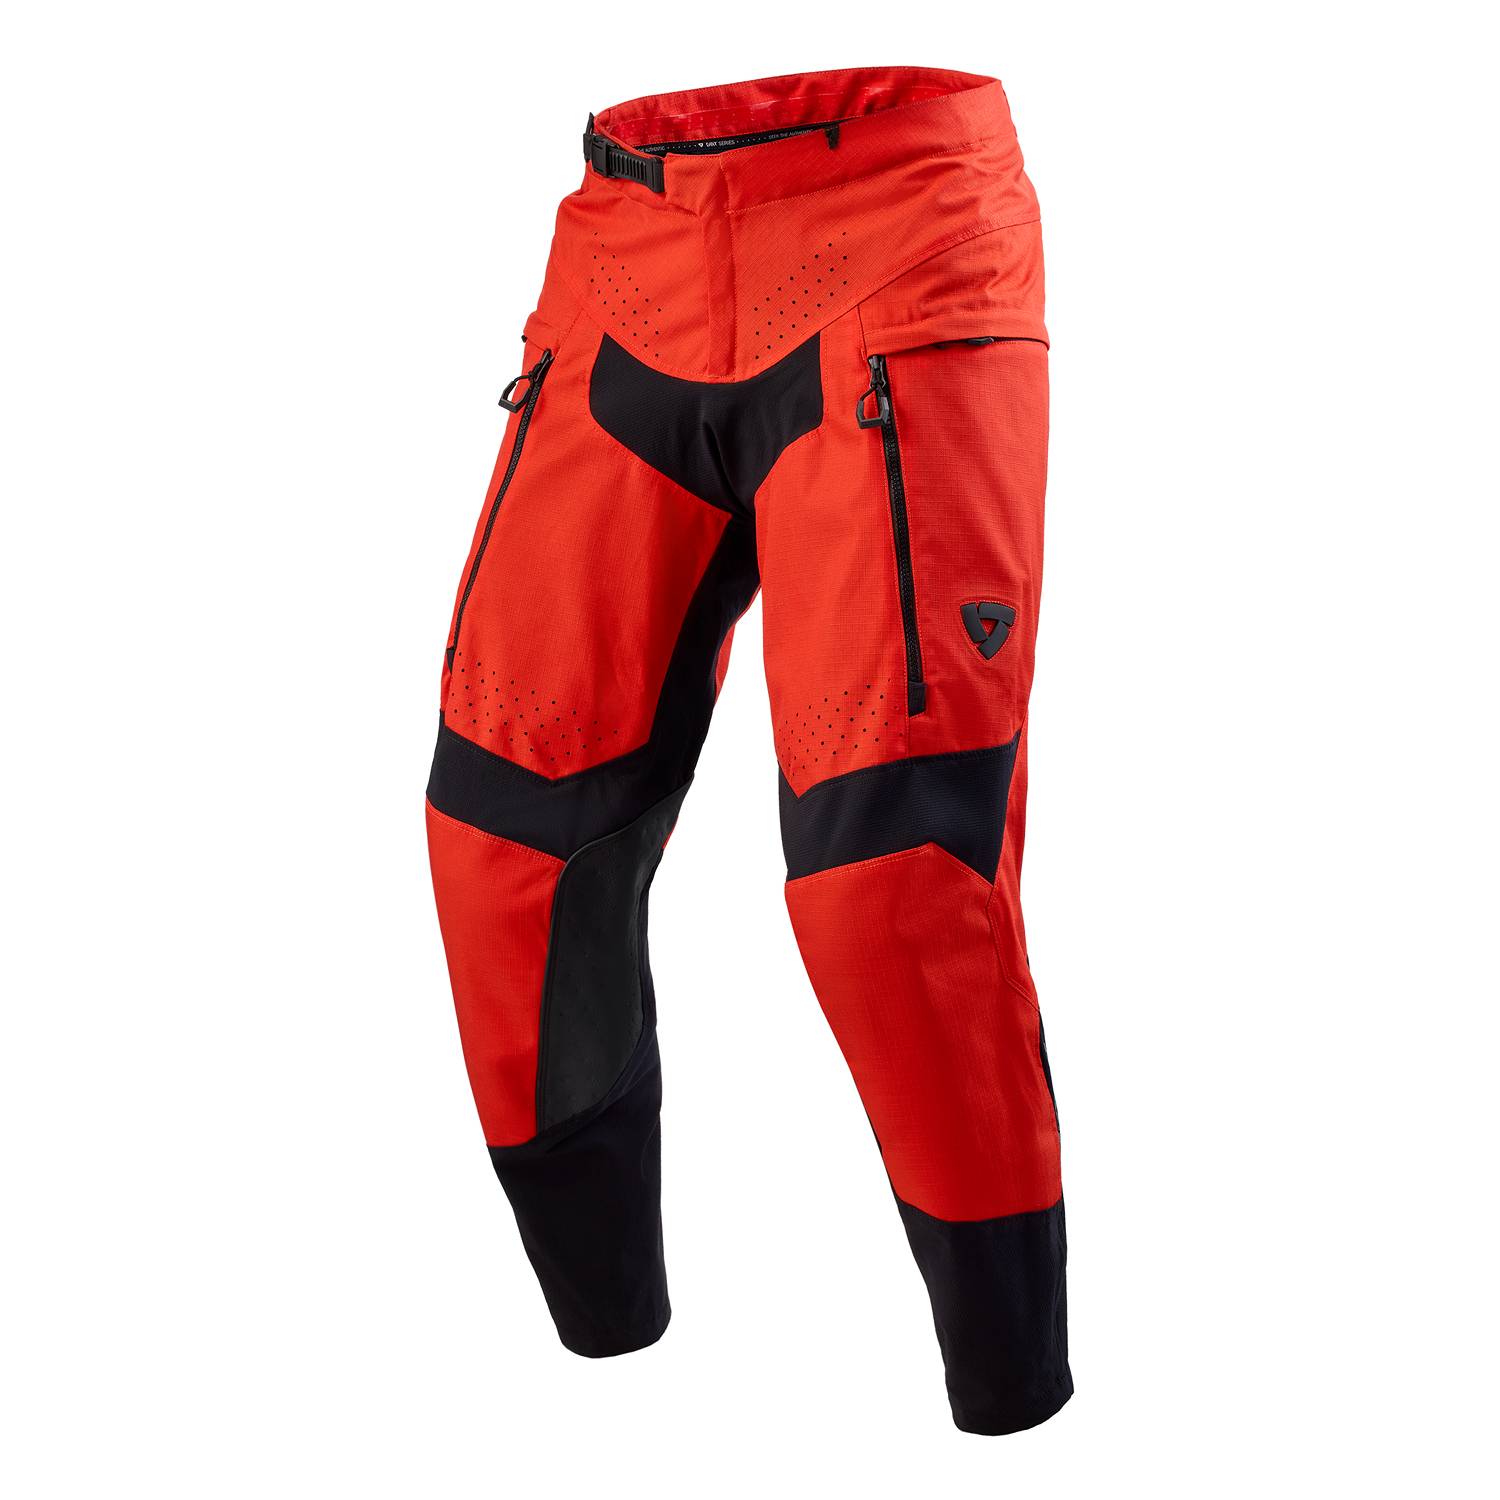 Image of REV'IT! Pants Peninsula Red Short Motorcycle Pants Size XYL ID 8700001349109